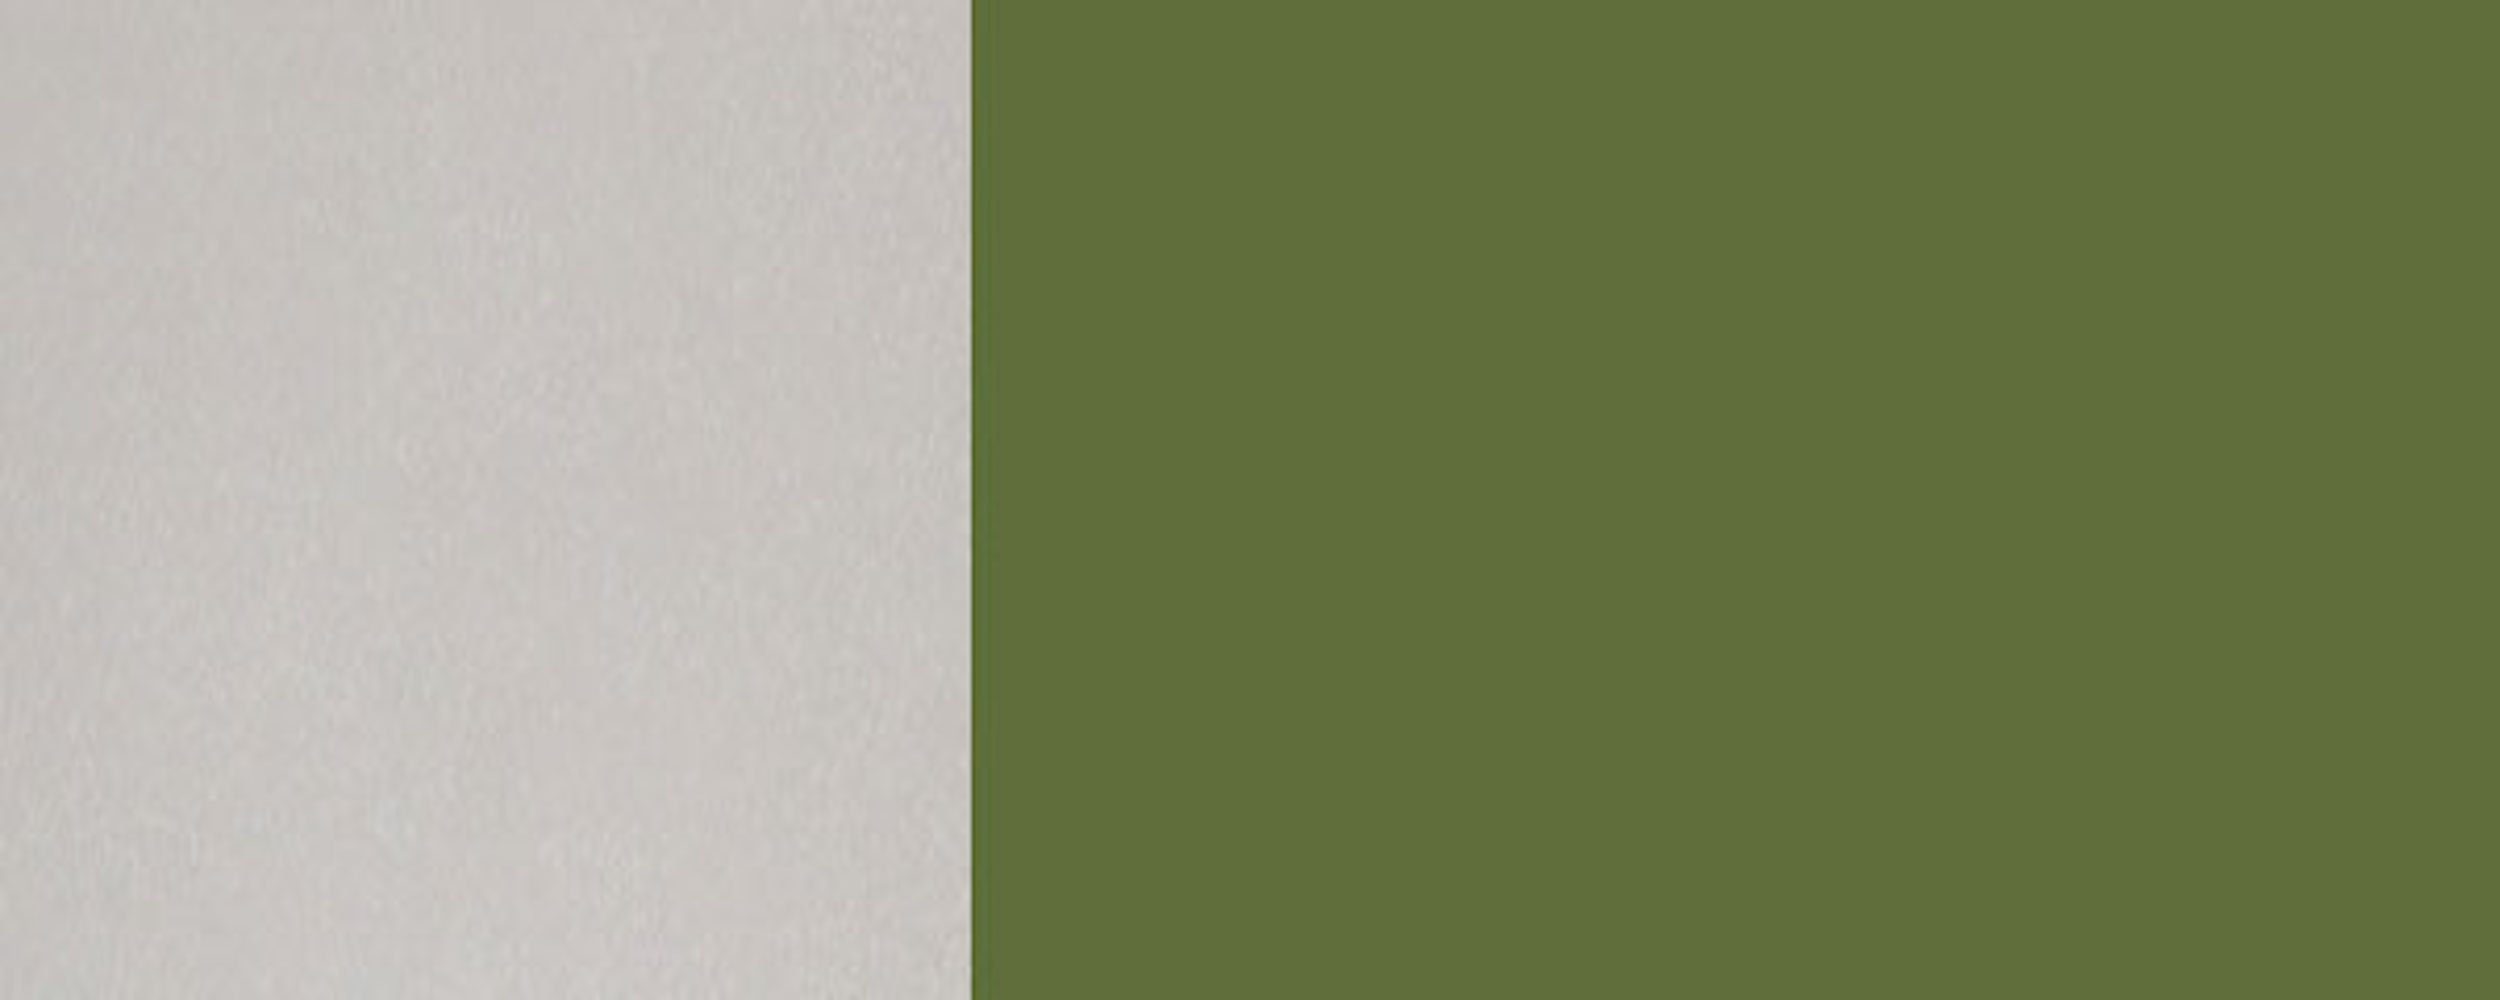 Hochglanz Front-, grifflos Florence Feldmann-Wohnen Ausführung RAL farngrün Ausrichtung wählbar (Florence) Korpusfarbe, & Unterschrank 6025 84cm